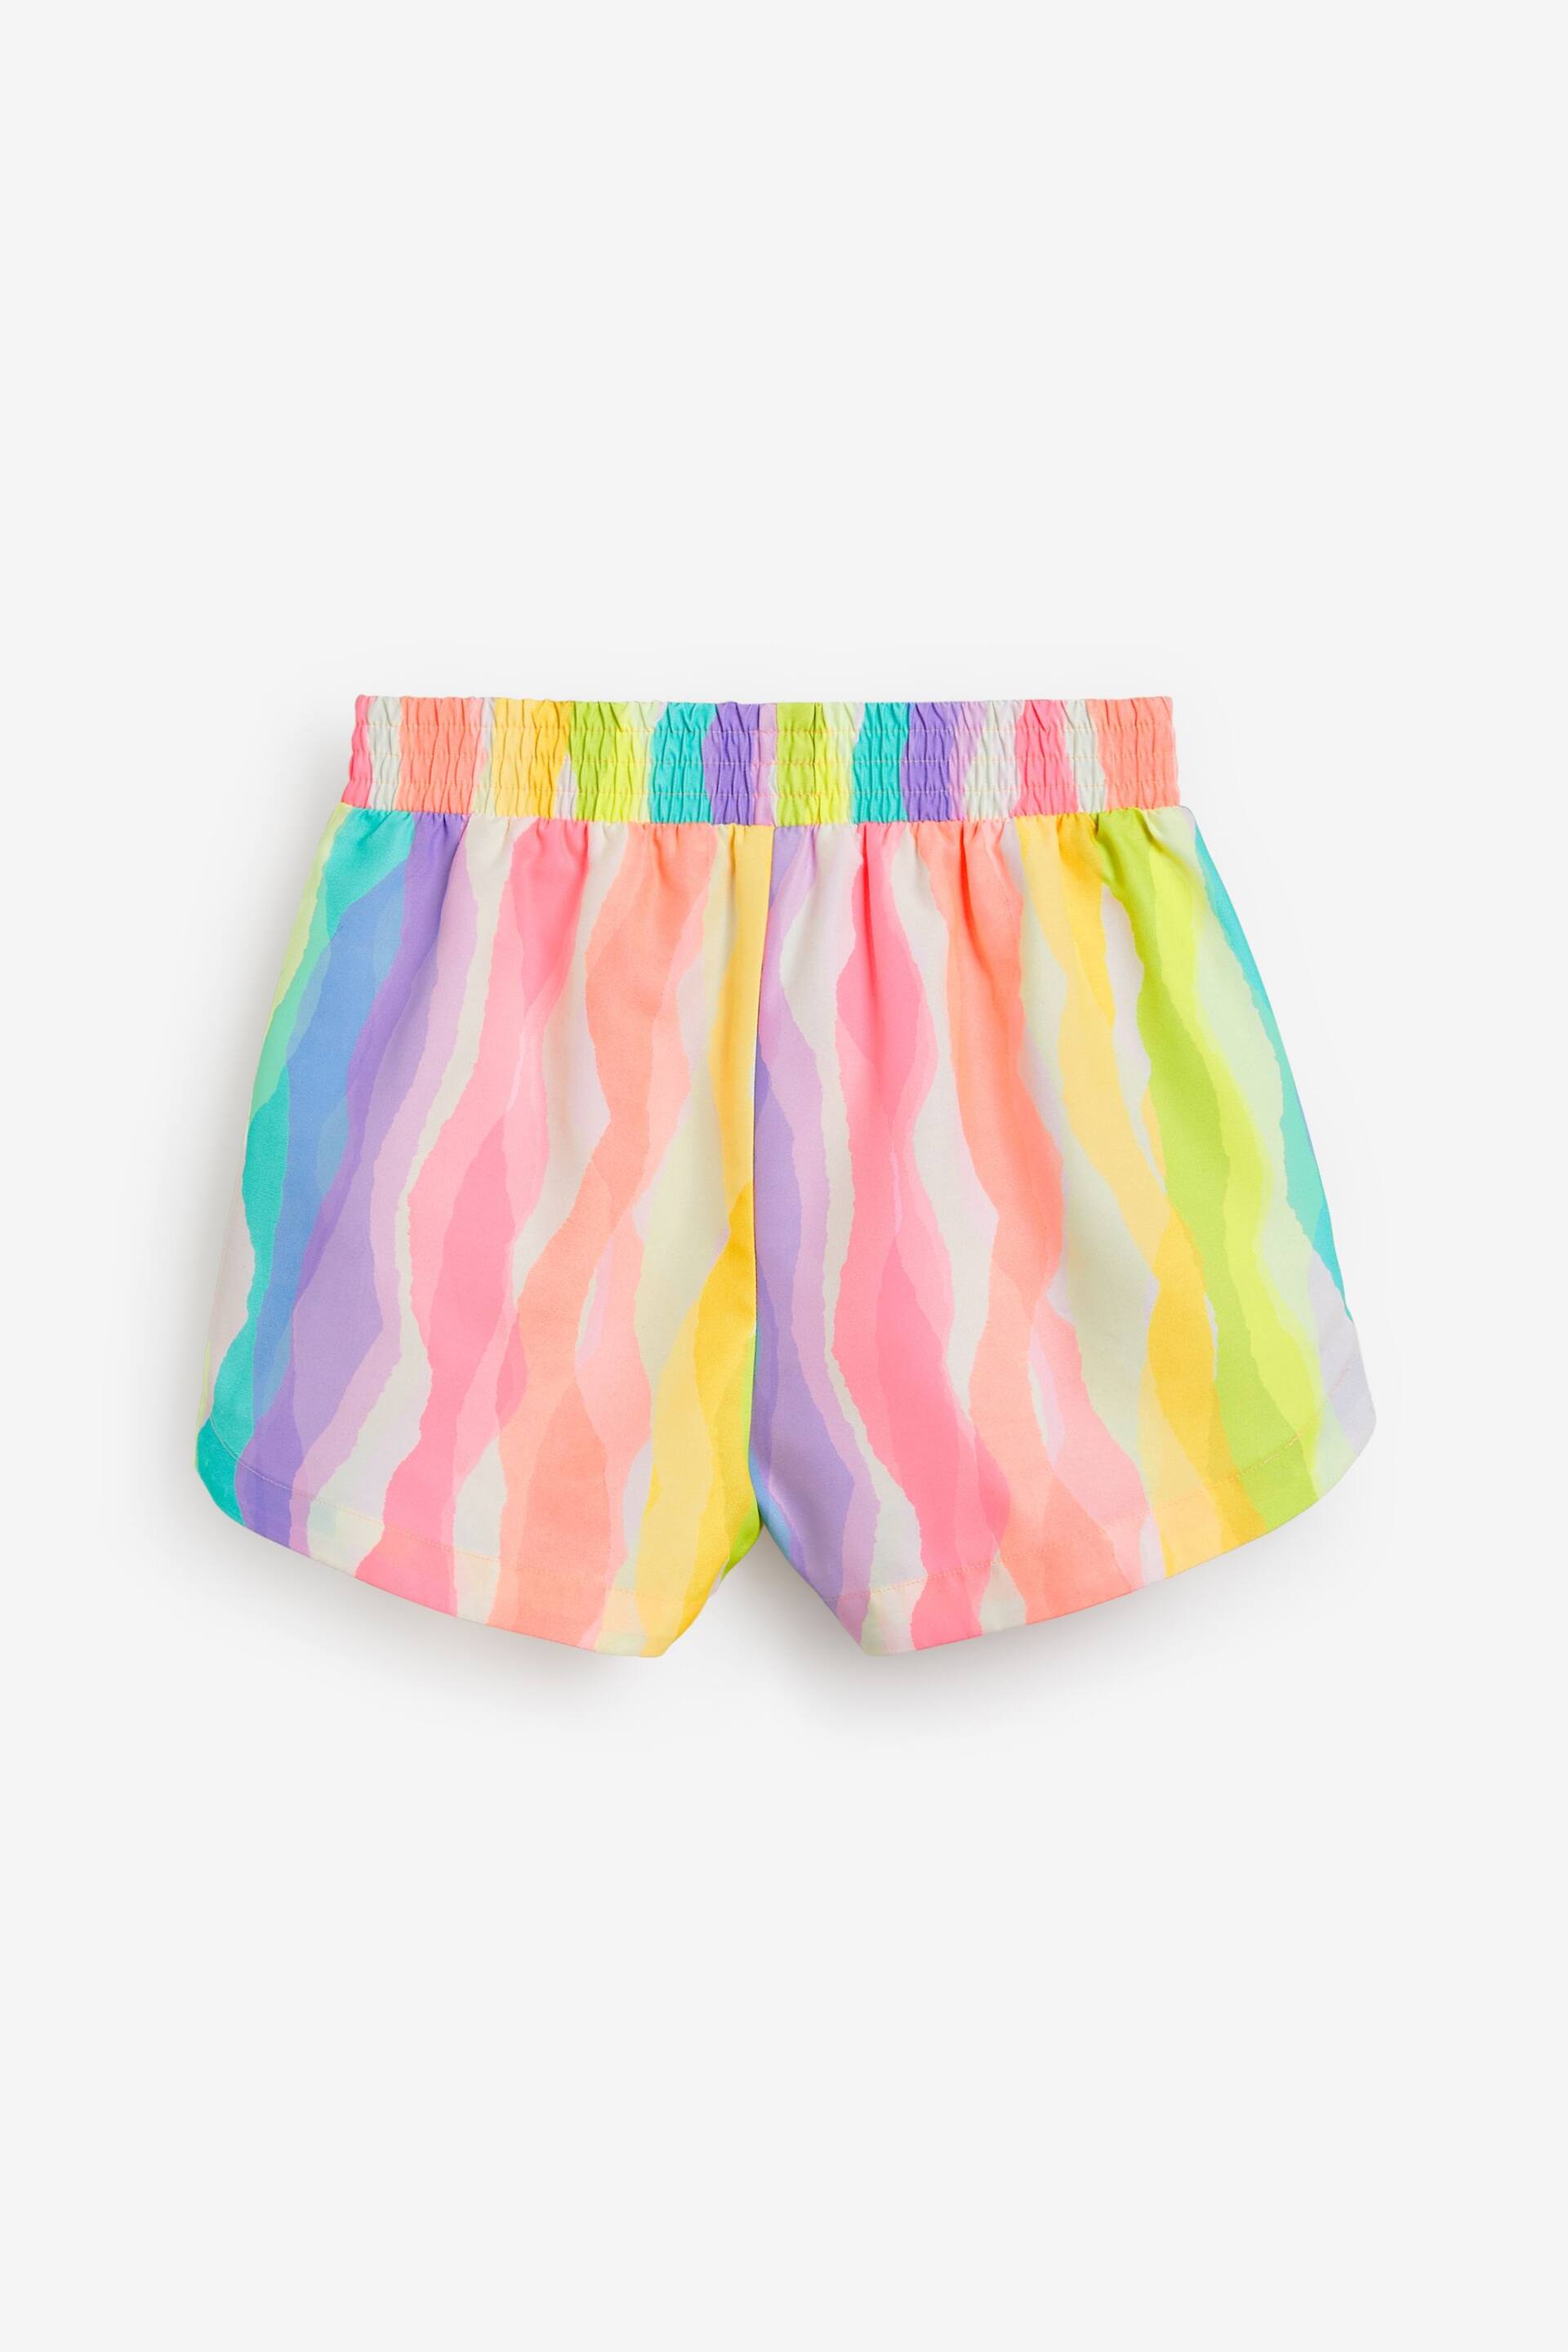 Multi Rainbow Beach Shorts - Image 5 of 6